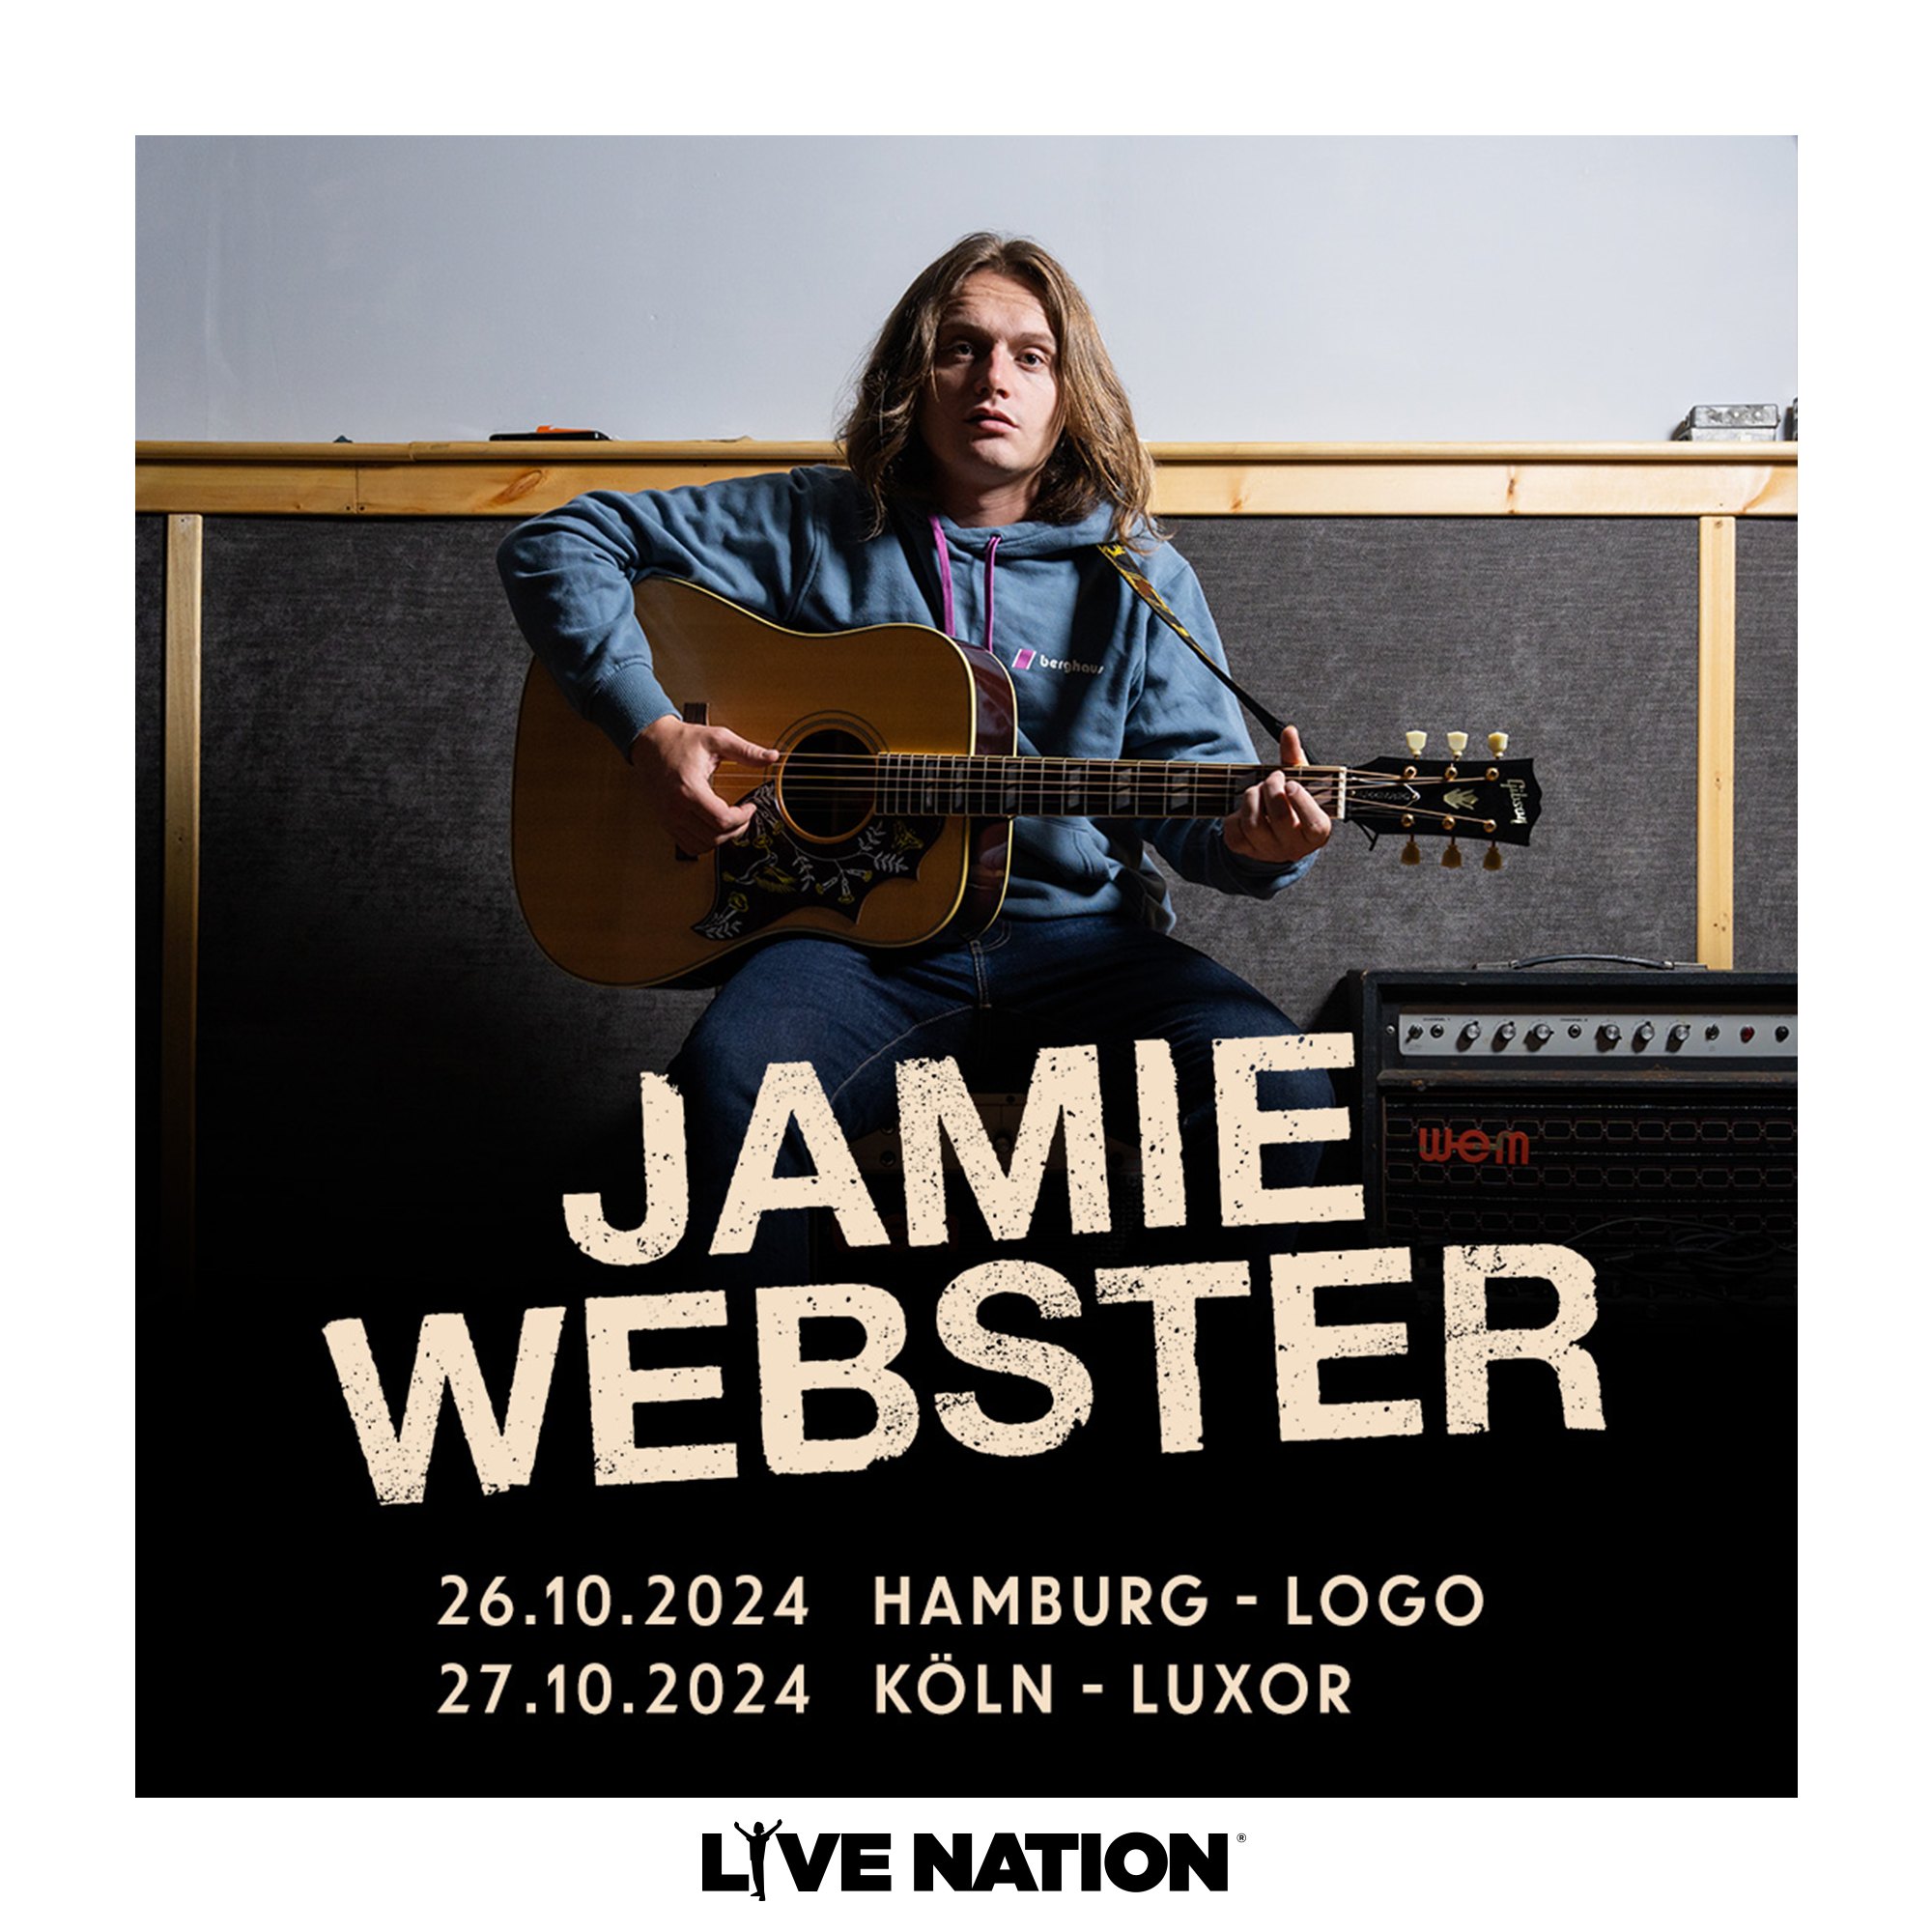 Jamie Webster al LOGO Hamburg Tickets